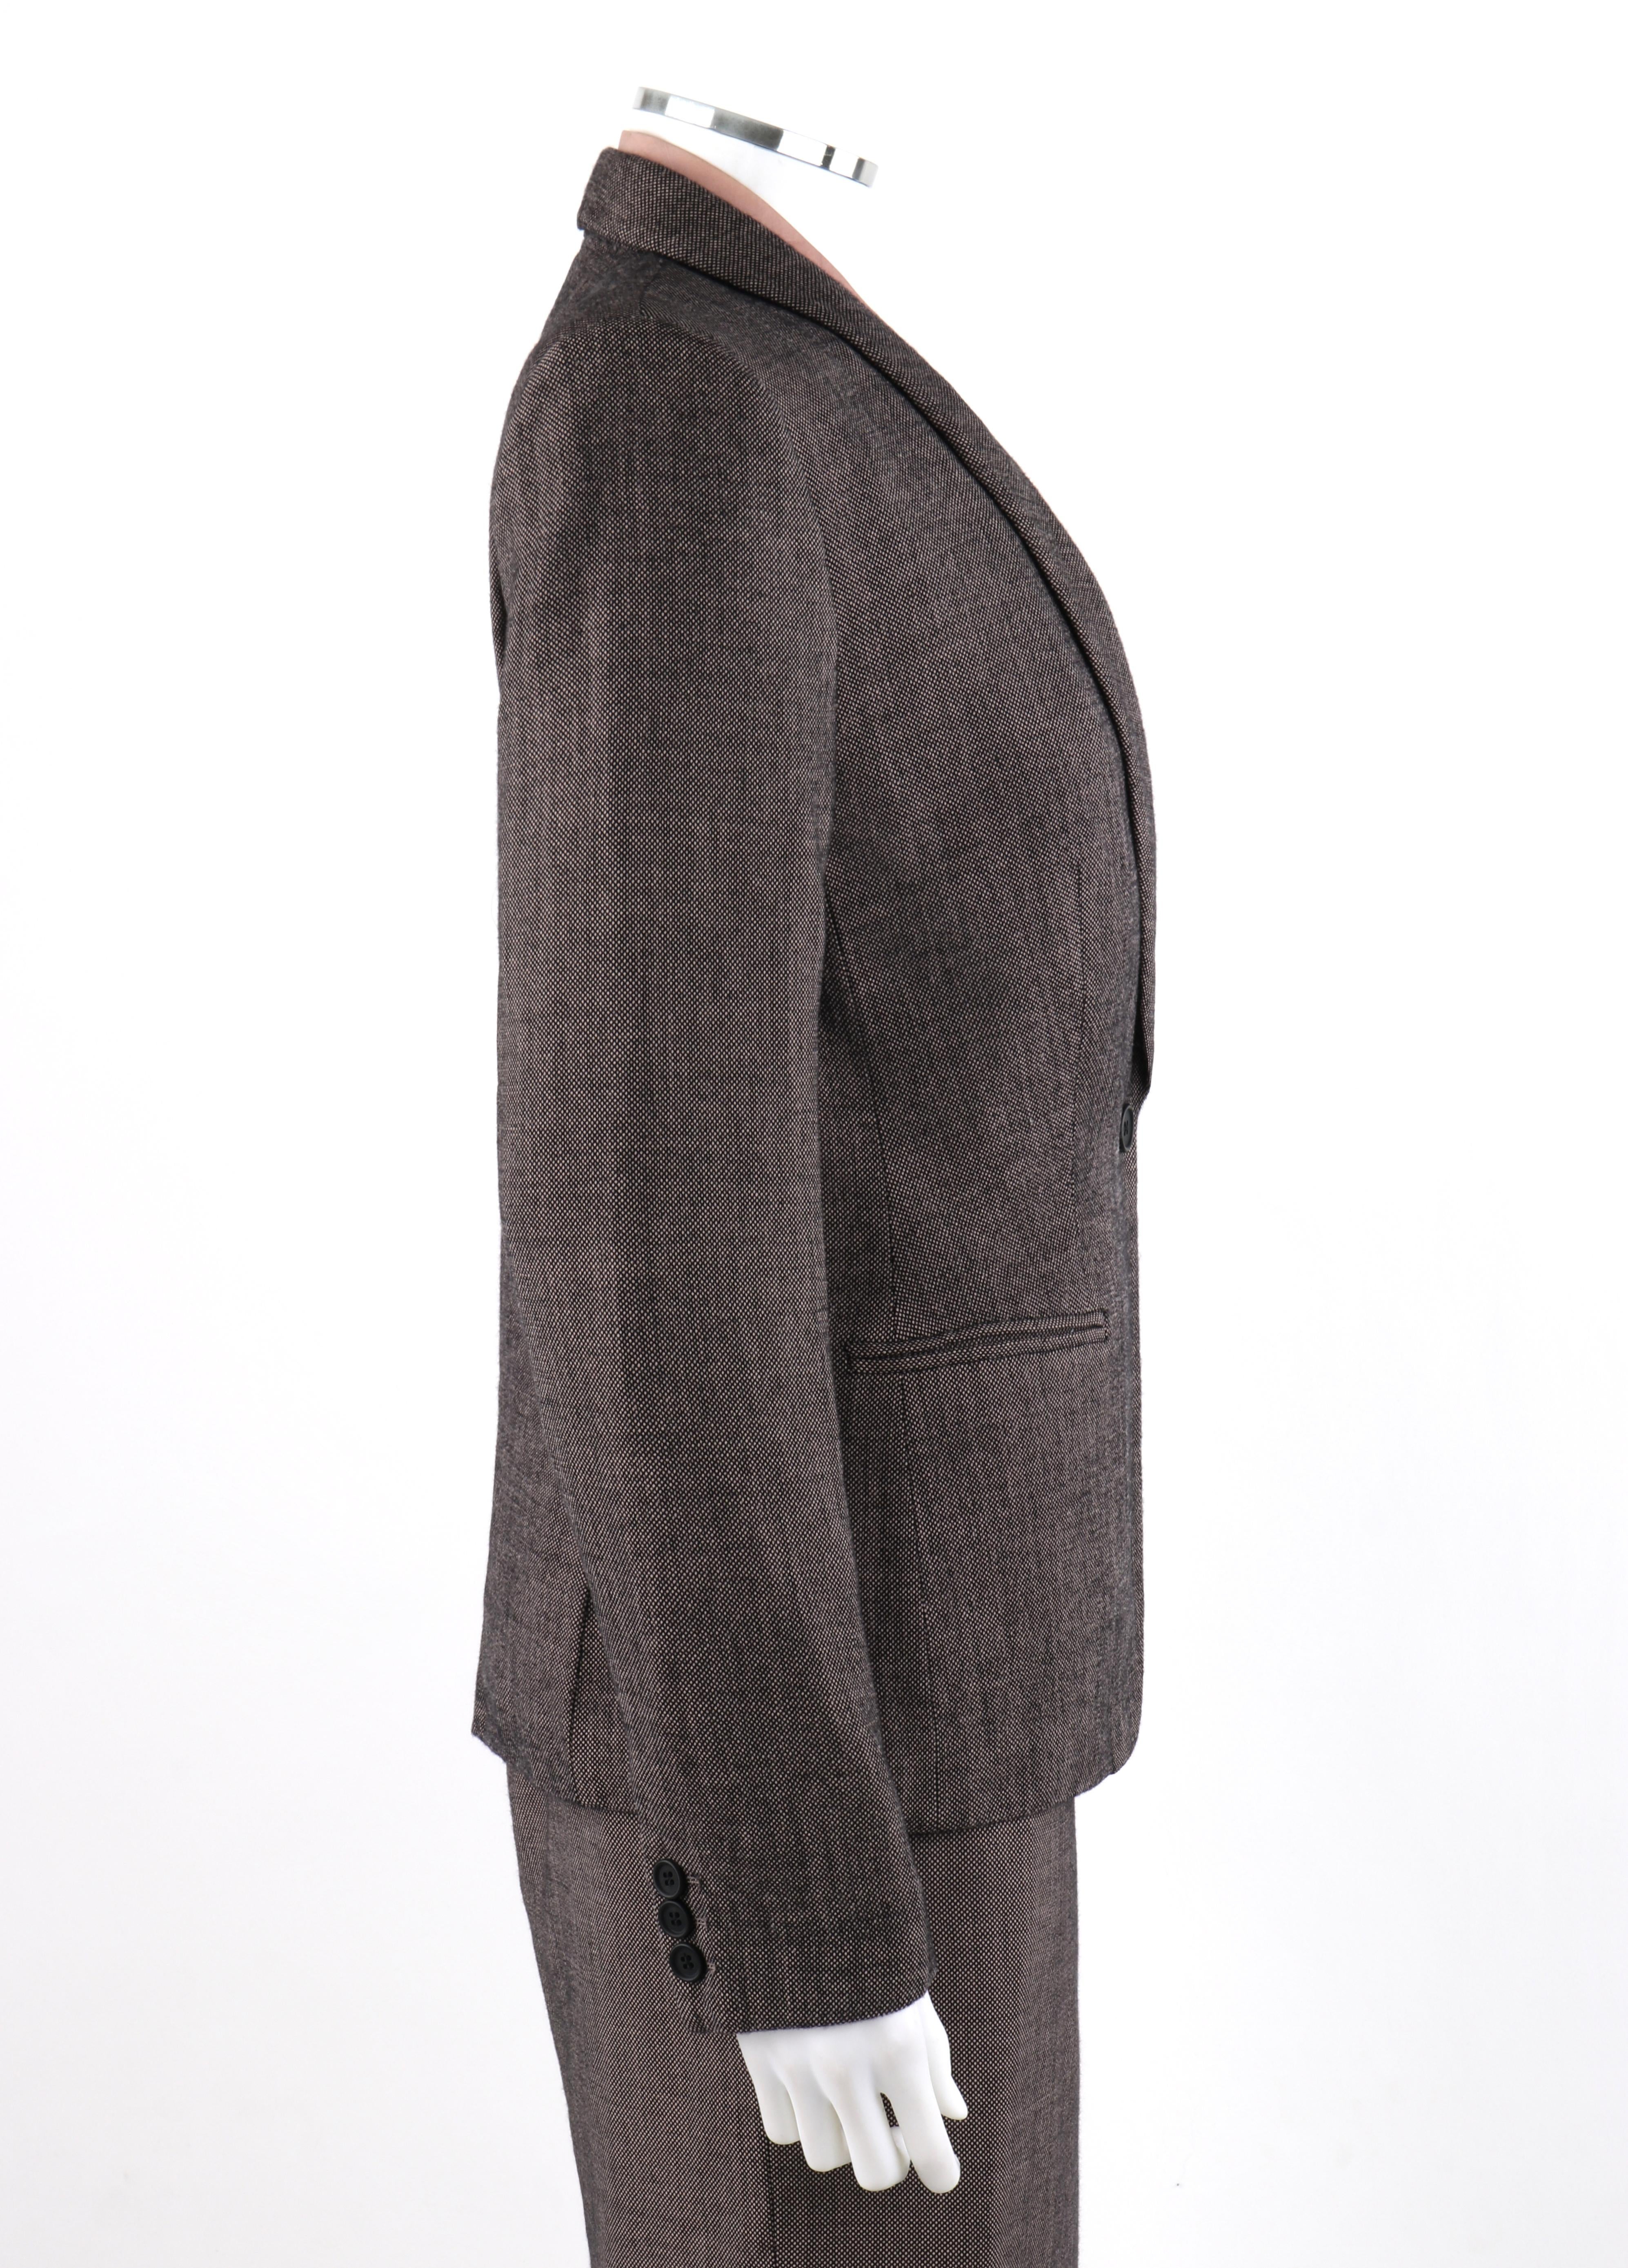 Black  ALEXANDER McQUEEN A/W 1998 “Joan” 2 pc. Removable Collar Blazer Skirt Suit Set For Sale